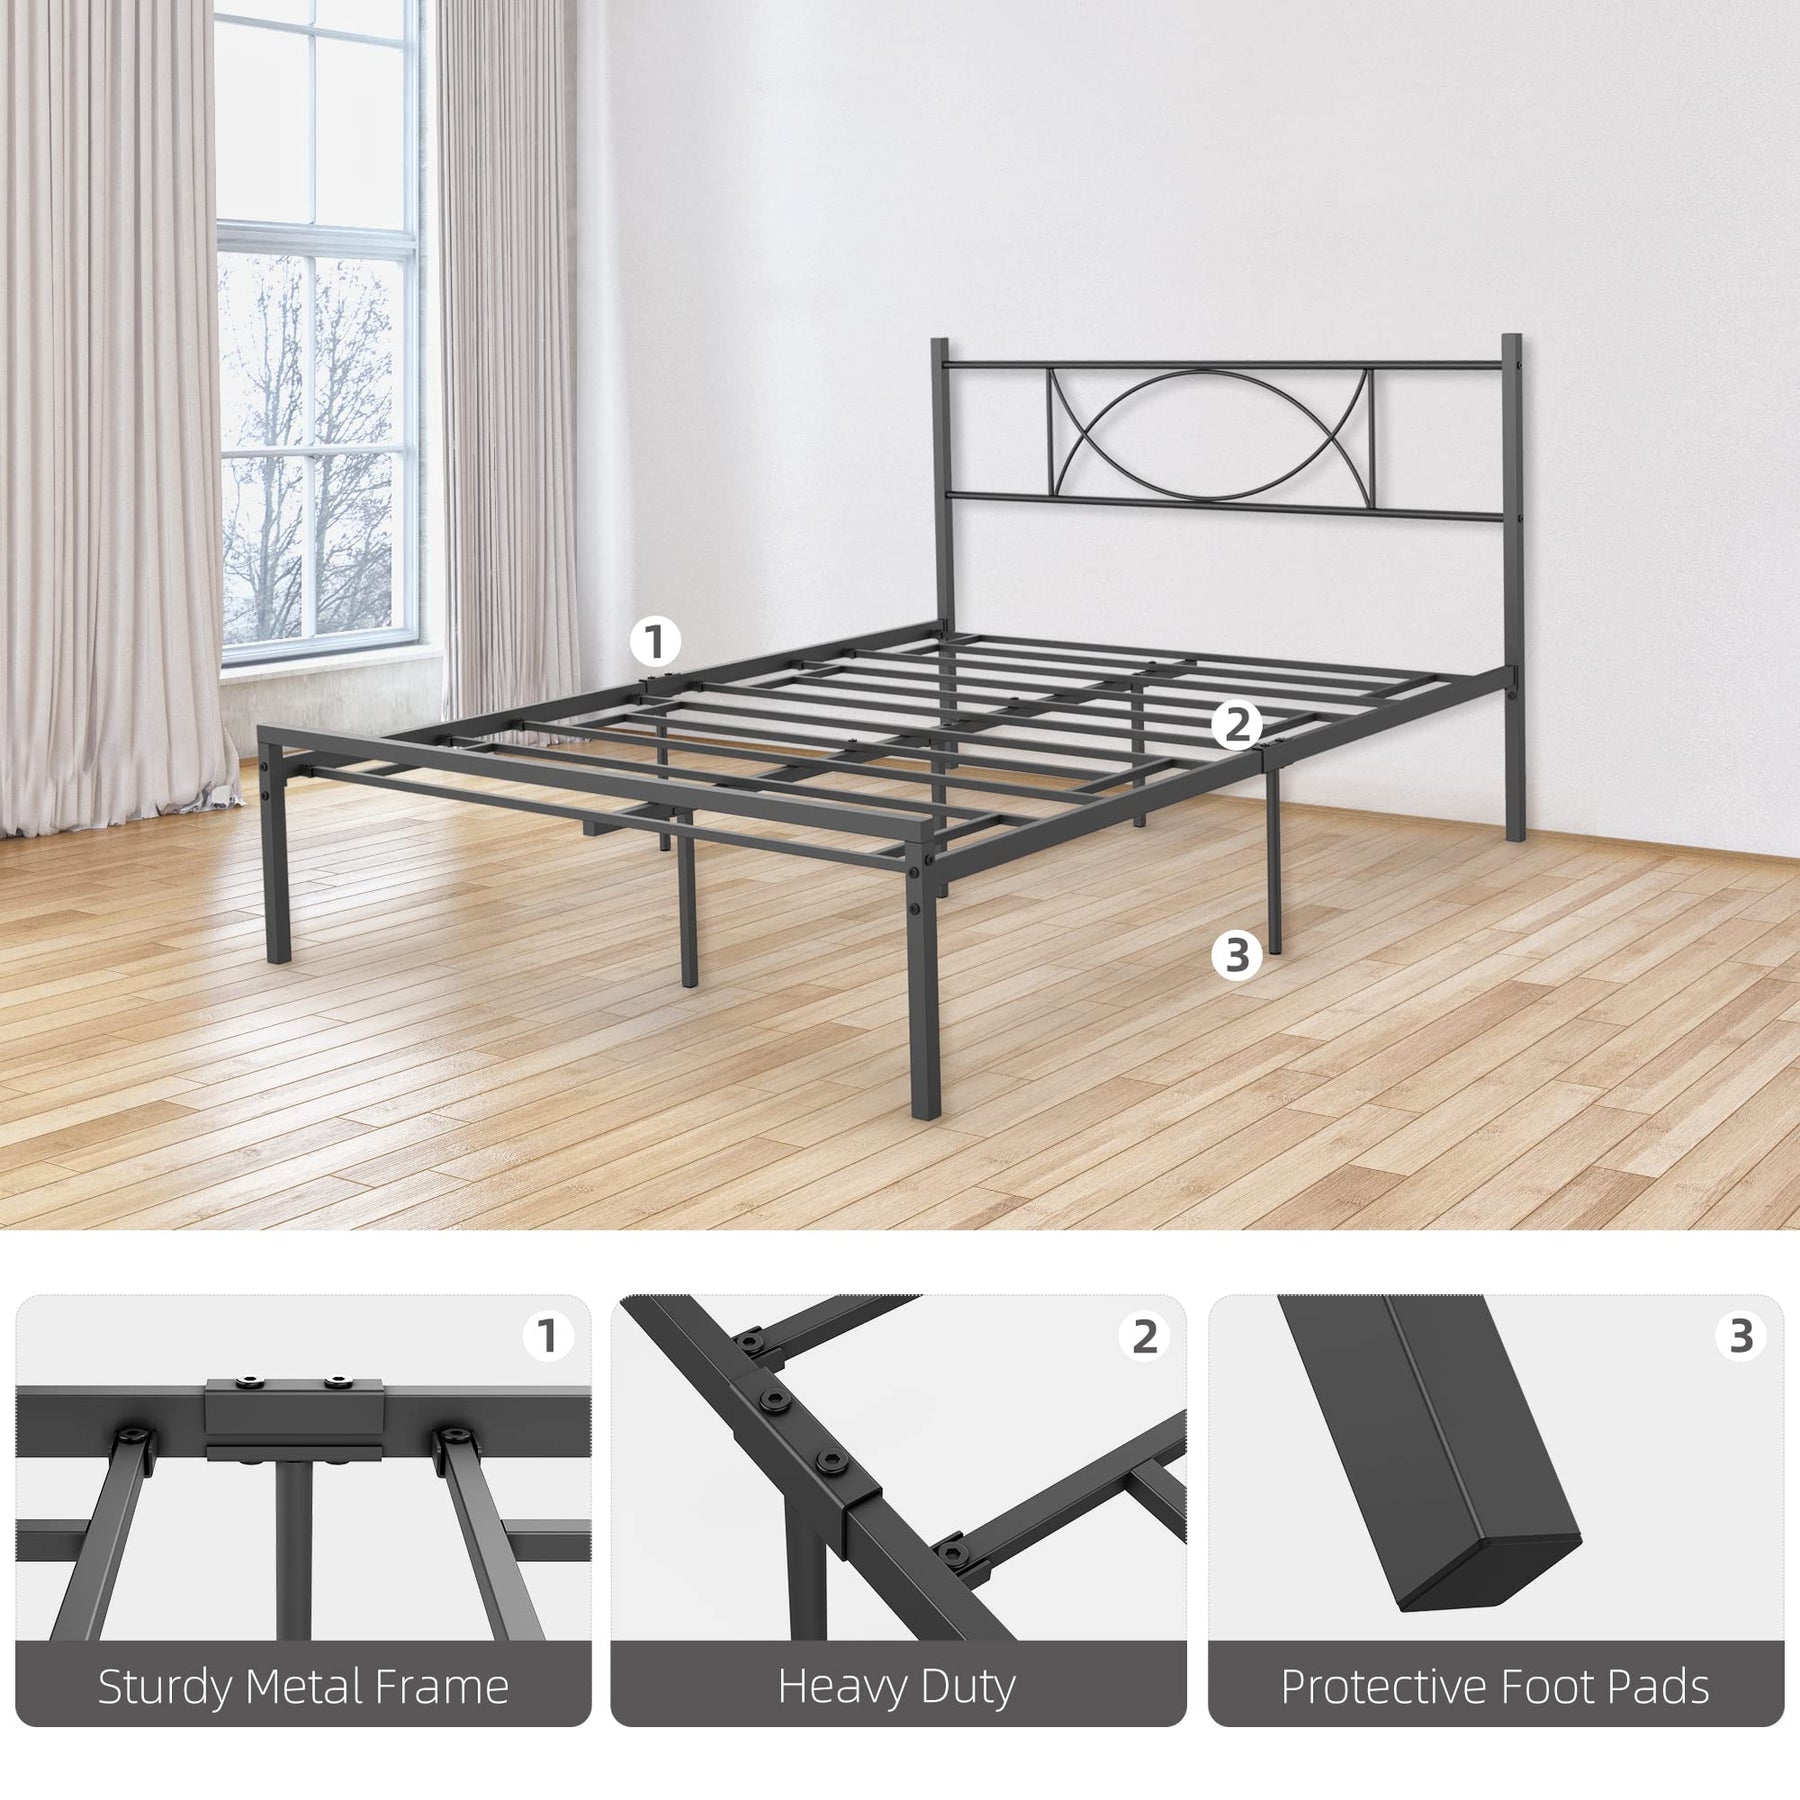 IDEALHOUSE Metal Platform Bed Frame with Sturdy Steel Bed Slats - Full Size